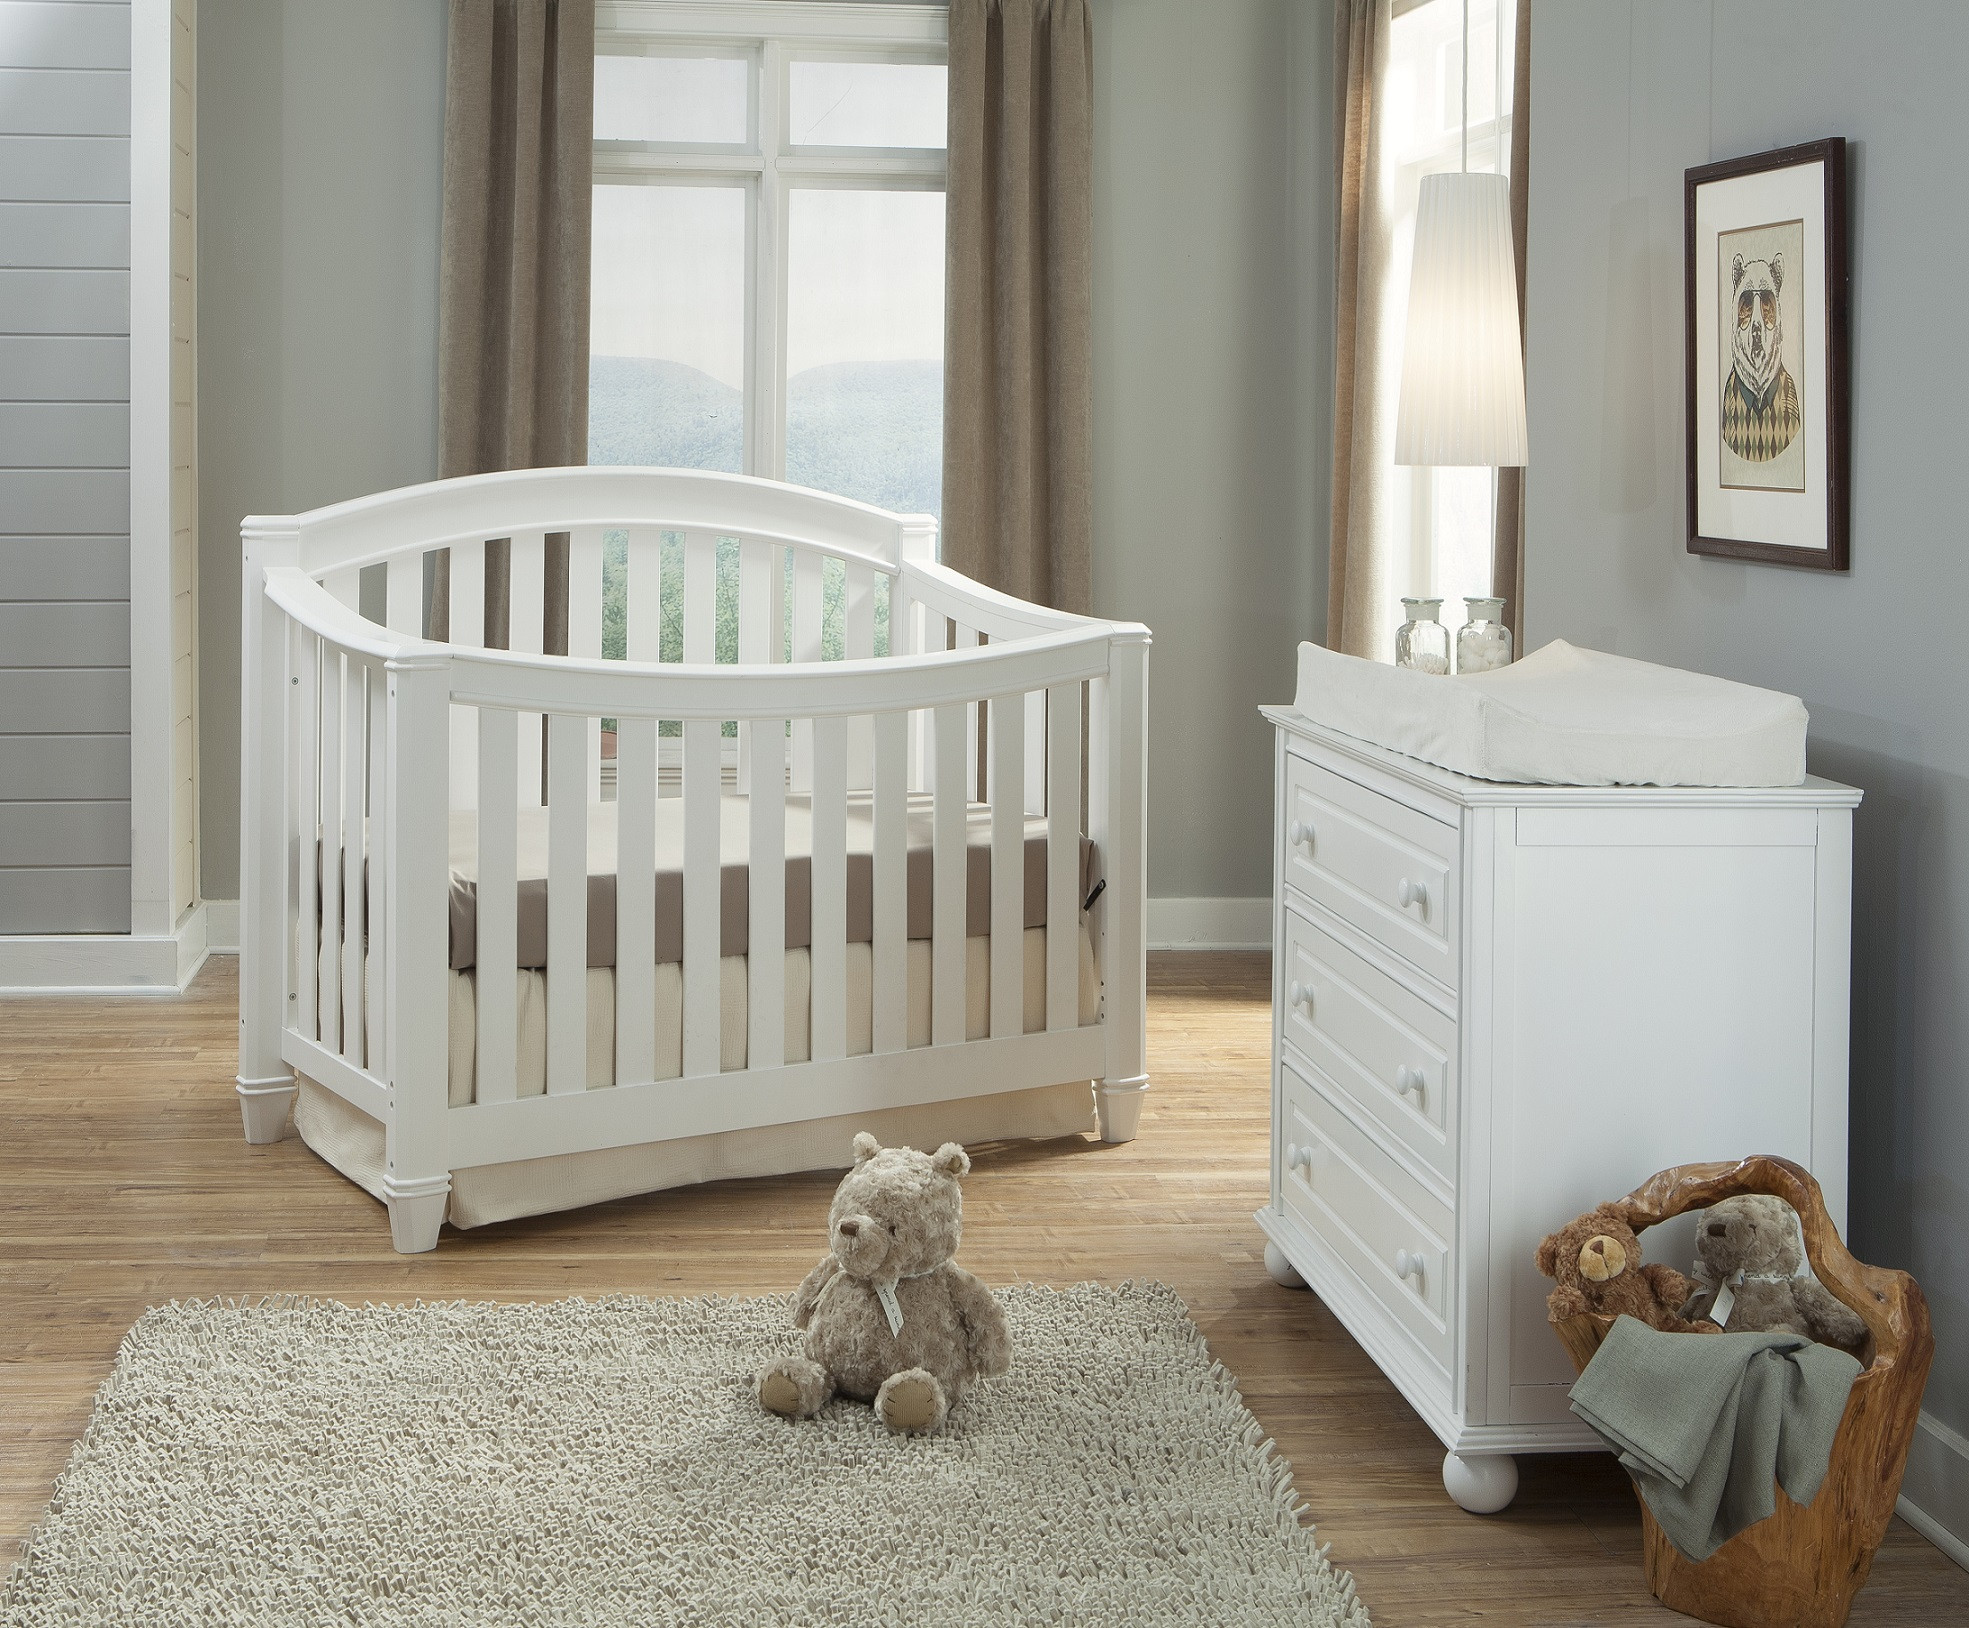 Child Craft Crib Recall
 Highlands 4 in 1 Convertible Crib